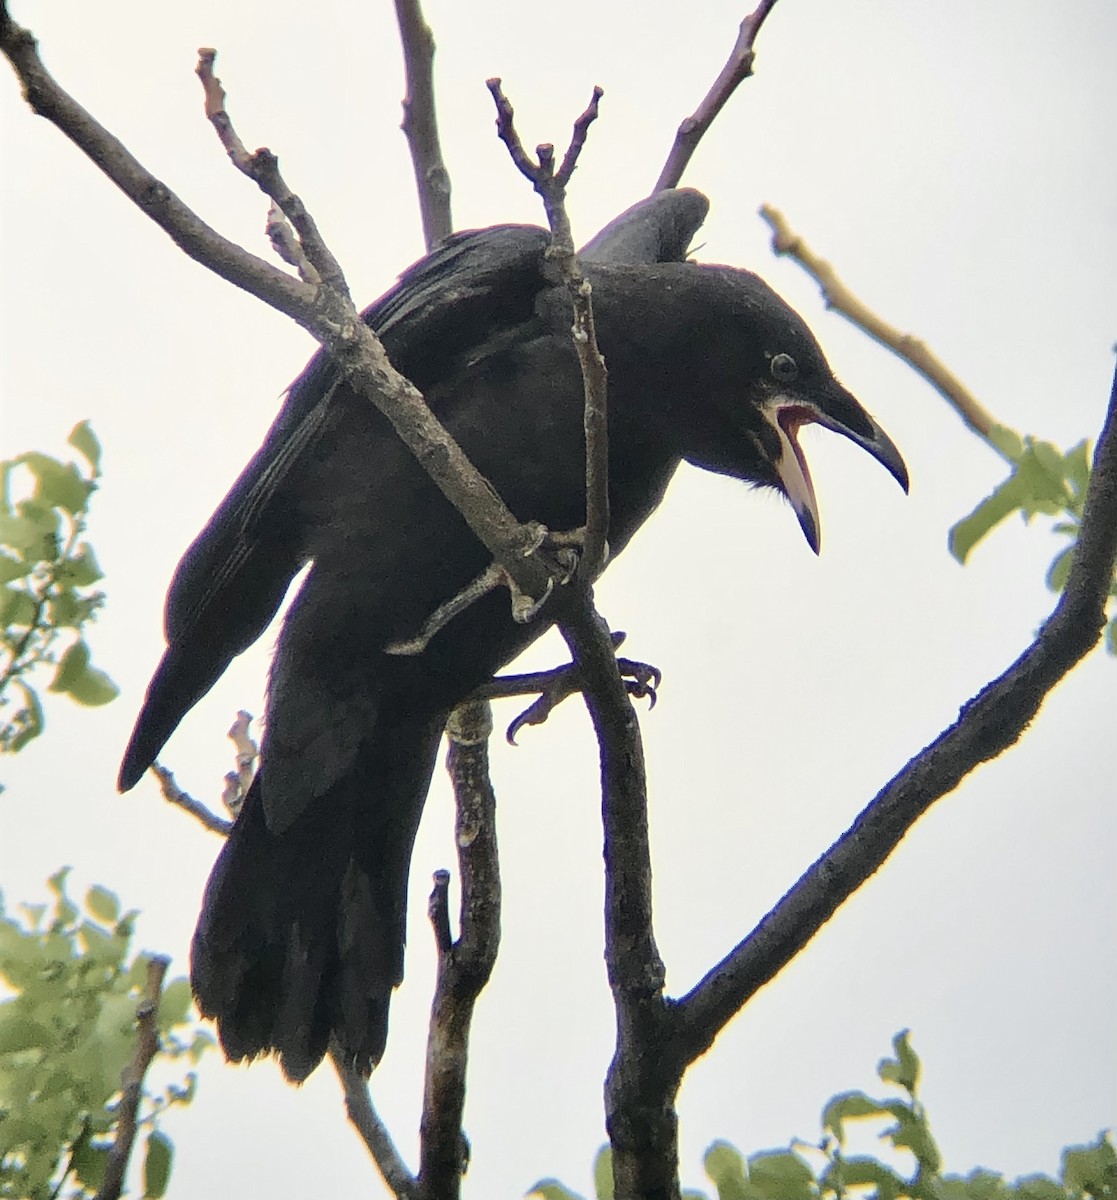 Common Raven - KZ F